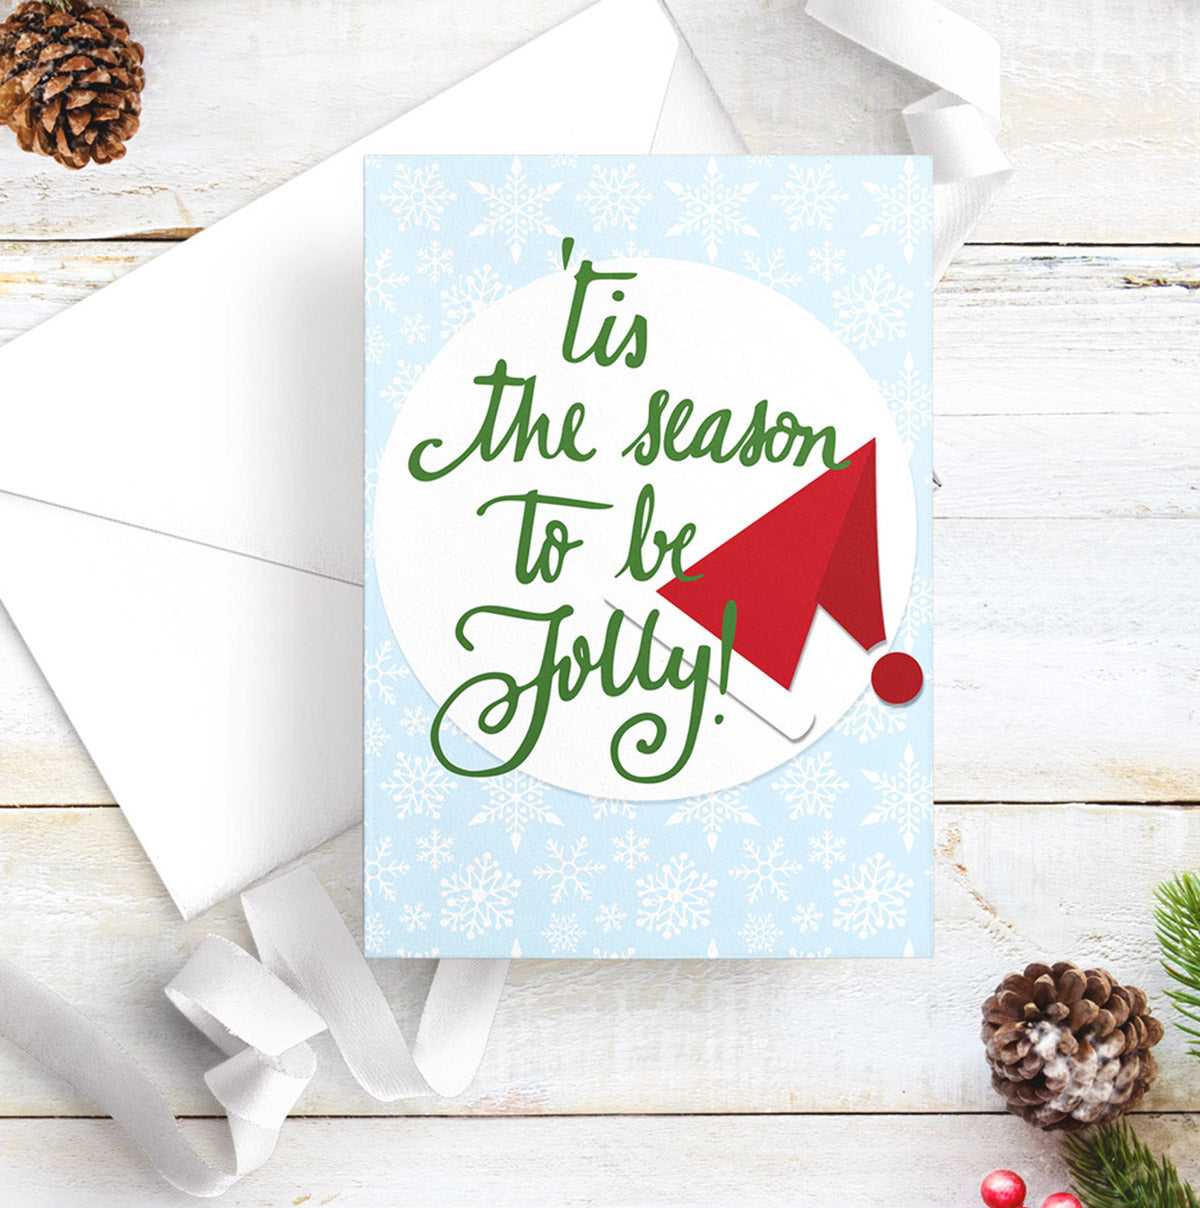 Tis the Season to be Jolly! (Santa Hat and Snowflakes)